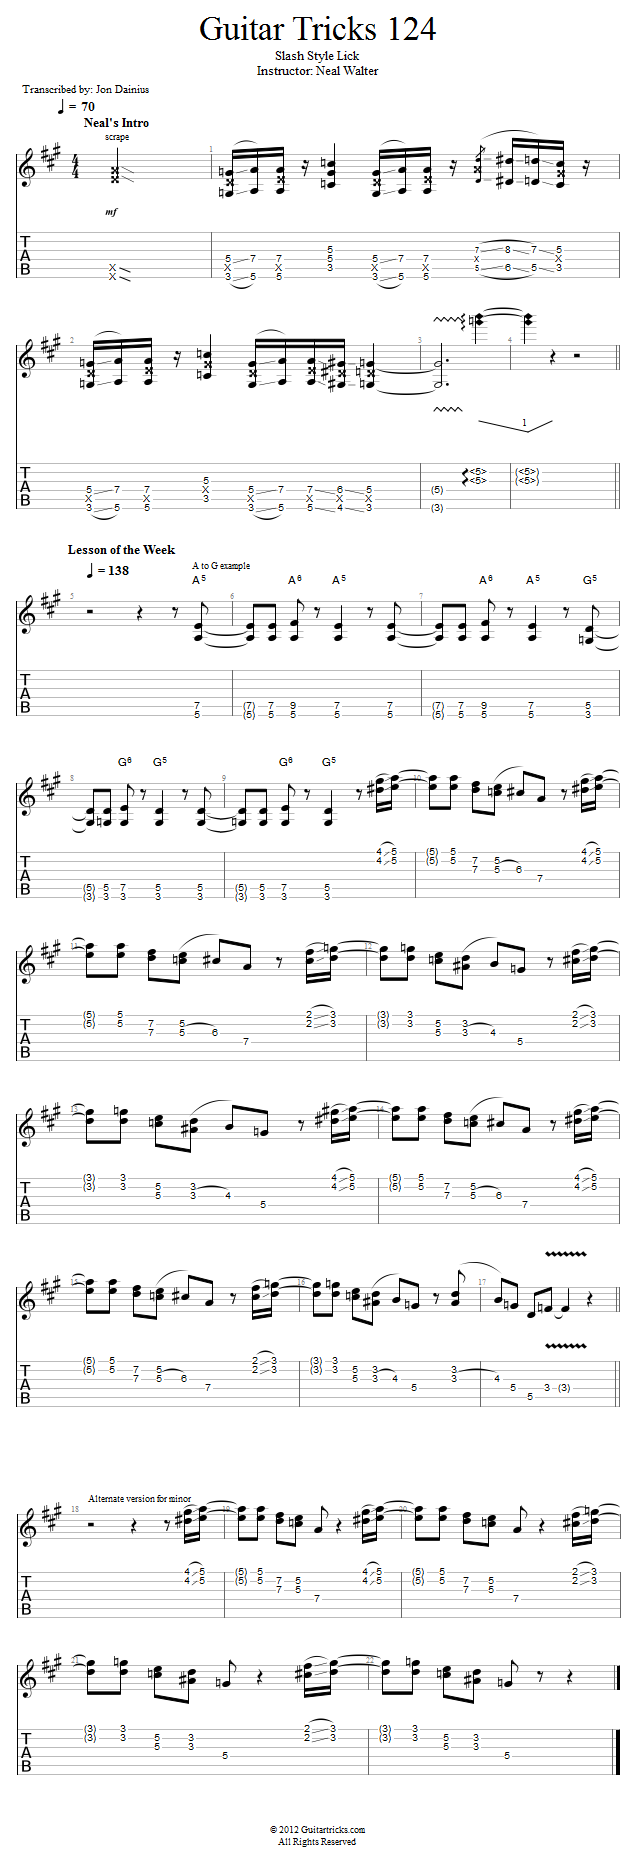 Guitar Tricks 124: Slash Style Lick song notation